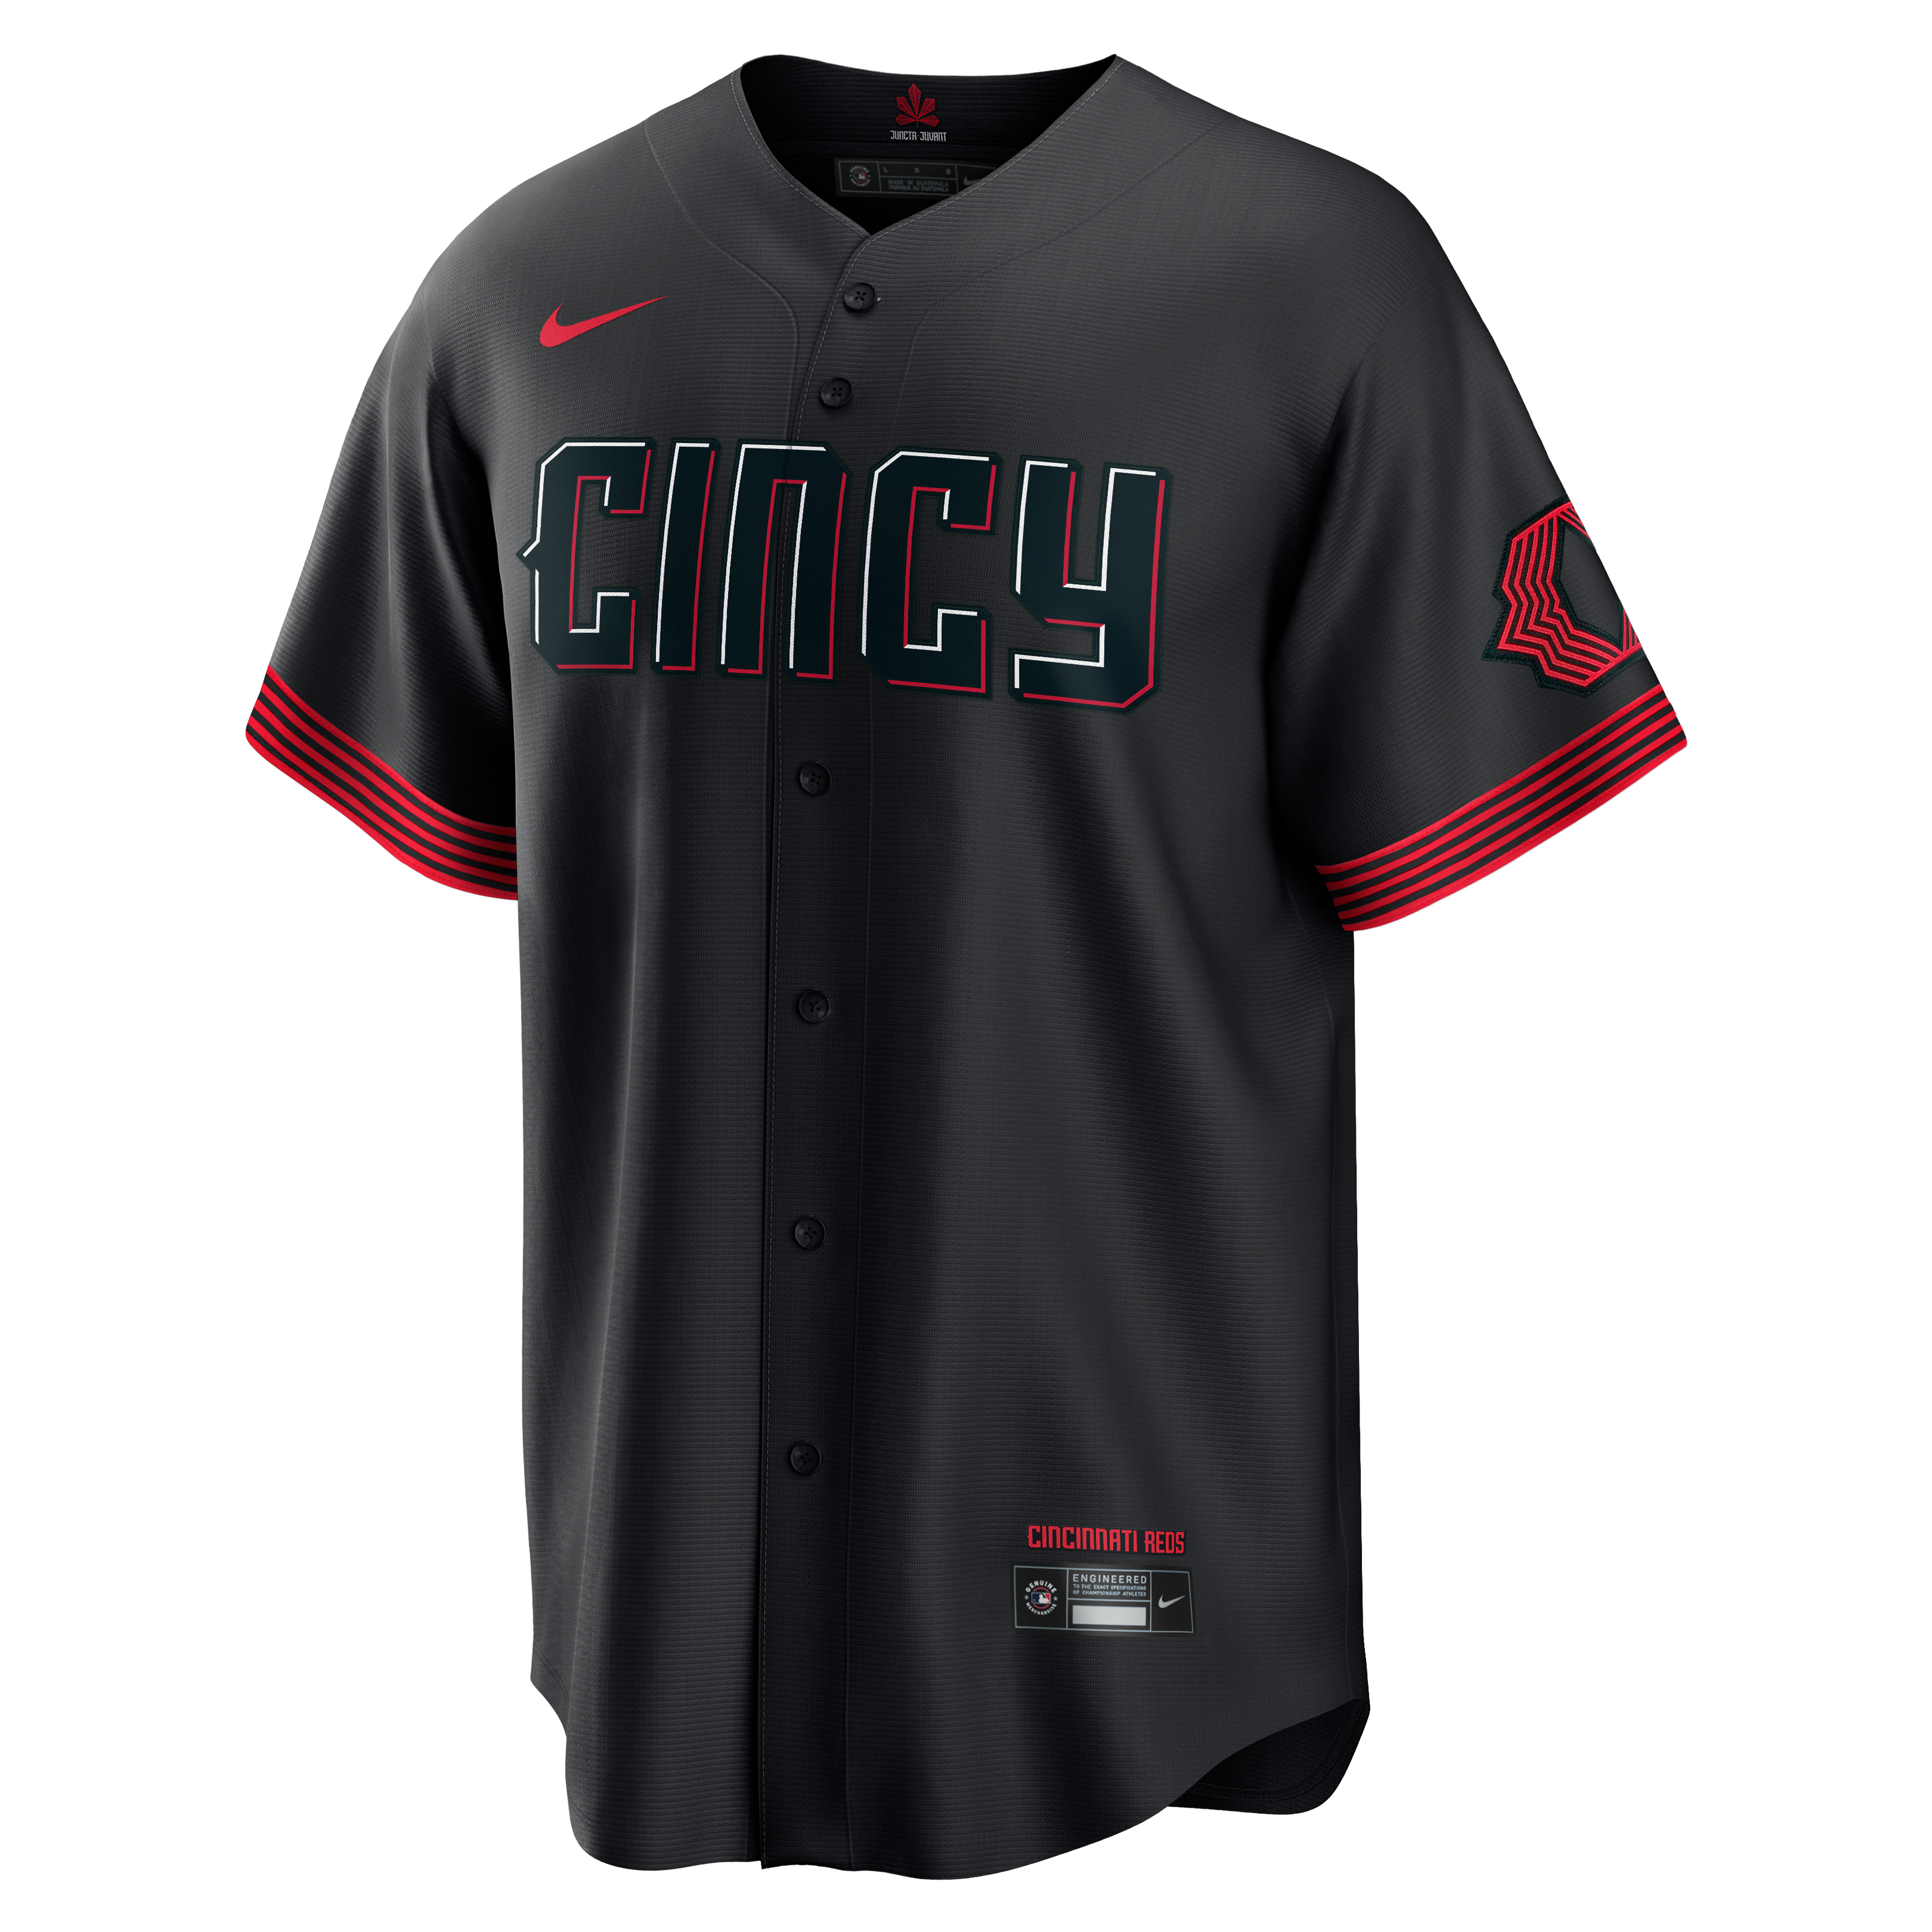 Cincinnati Reds Black Jersey: Design details and origin of City Connect  uniform, explained